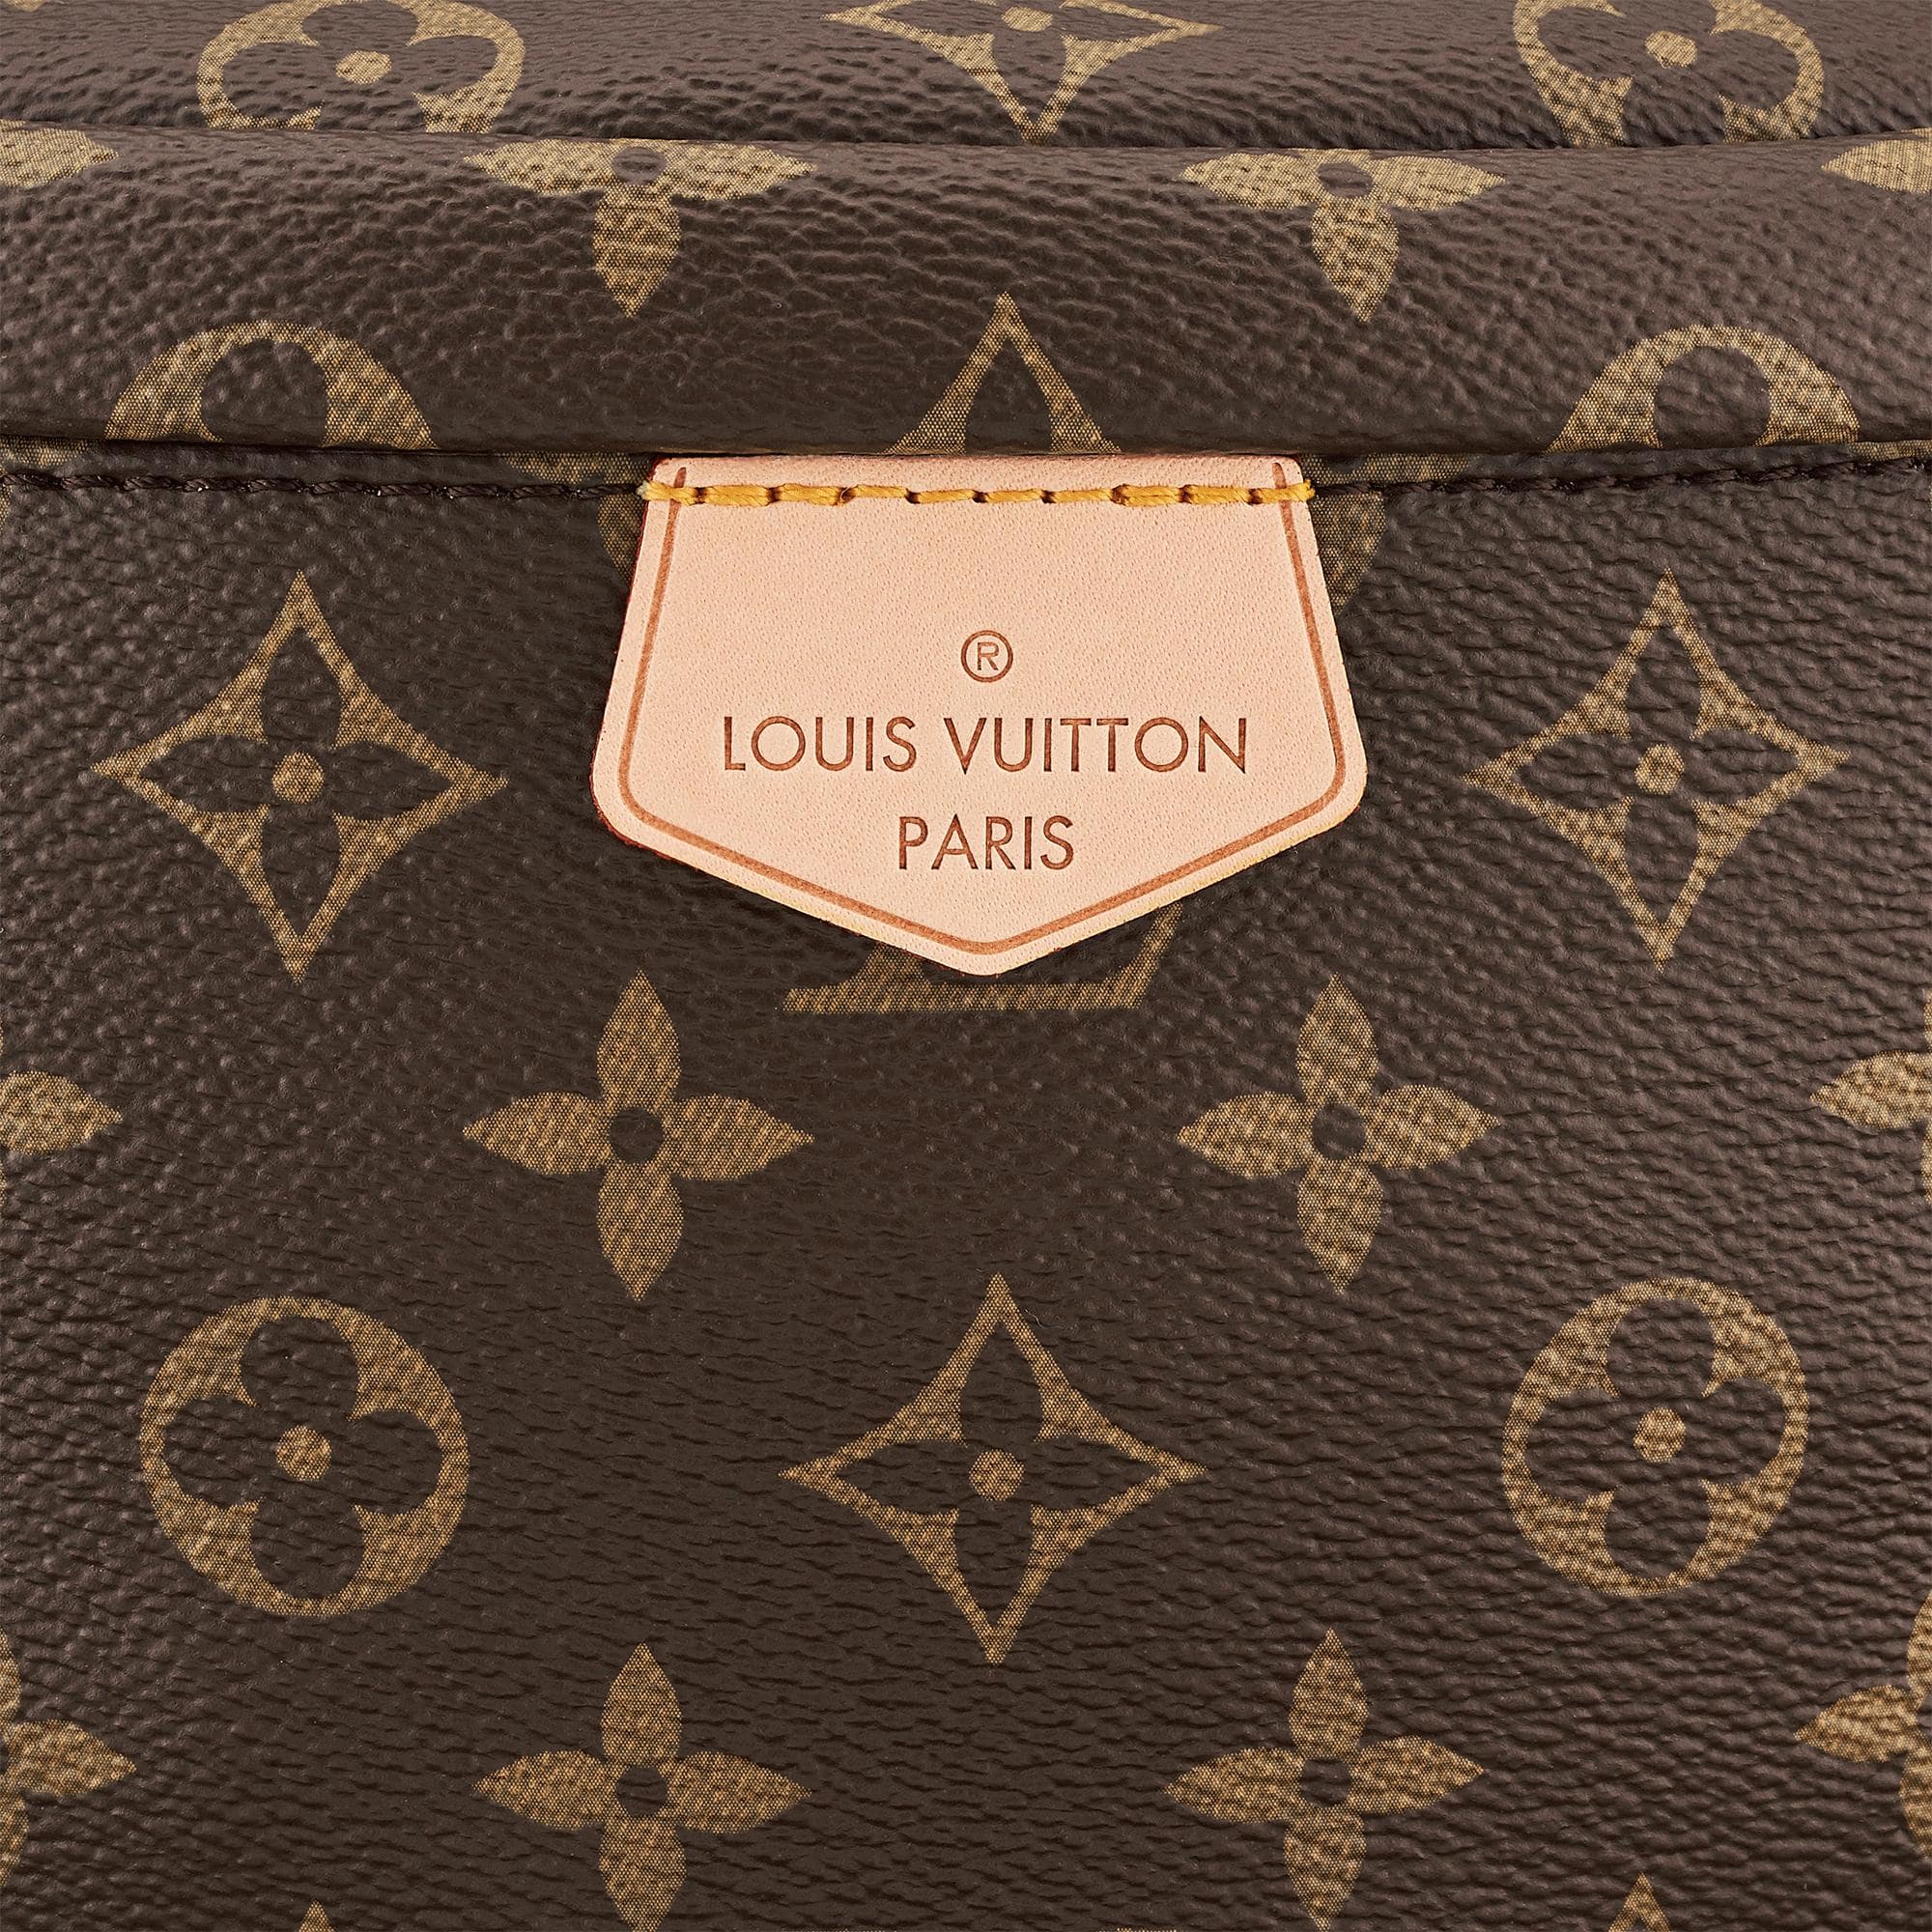 My little Louis Vuitton laptop bag [Review] : r/RepladiesDesigner